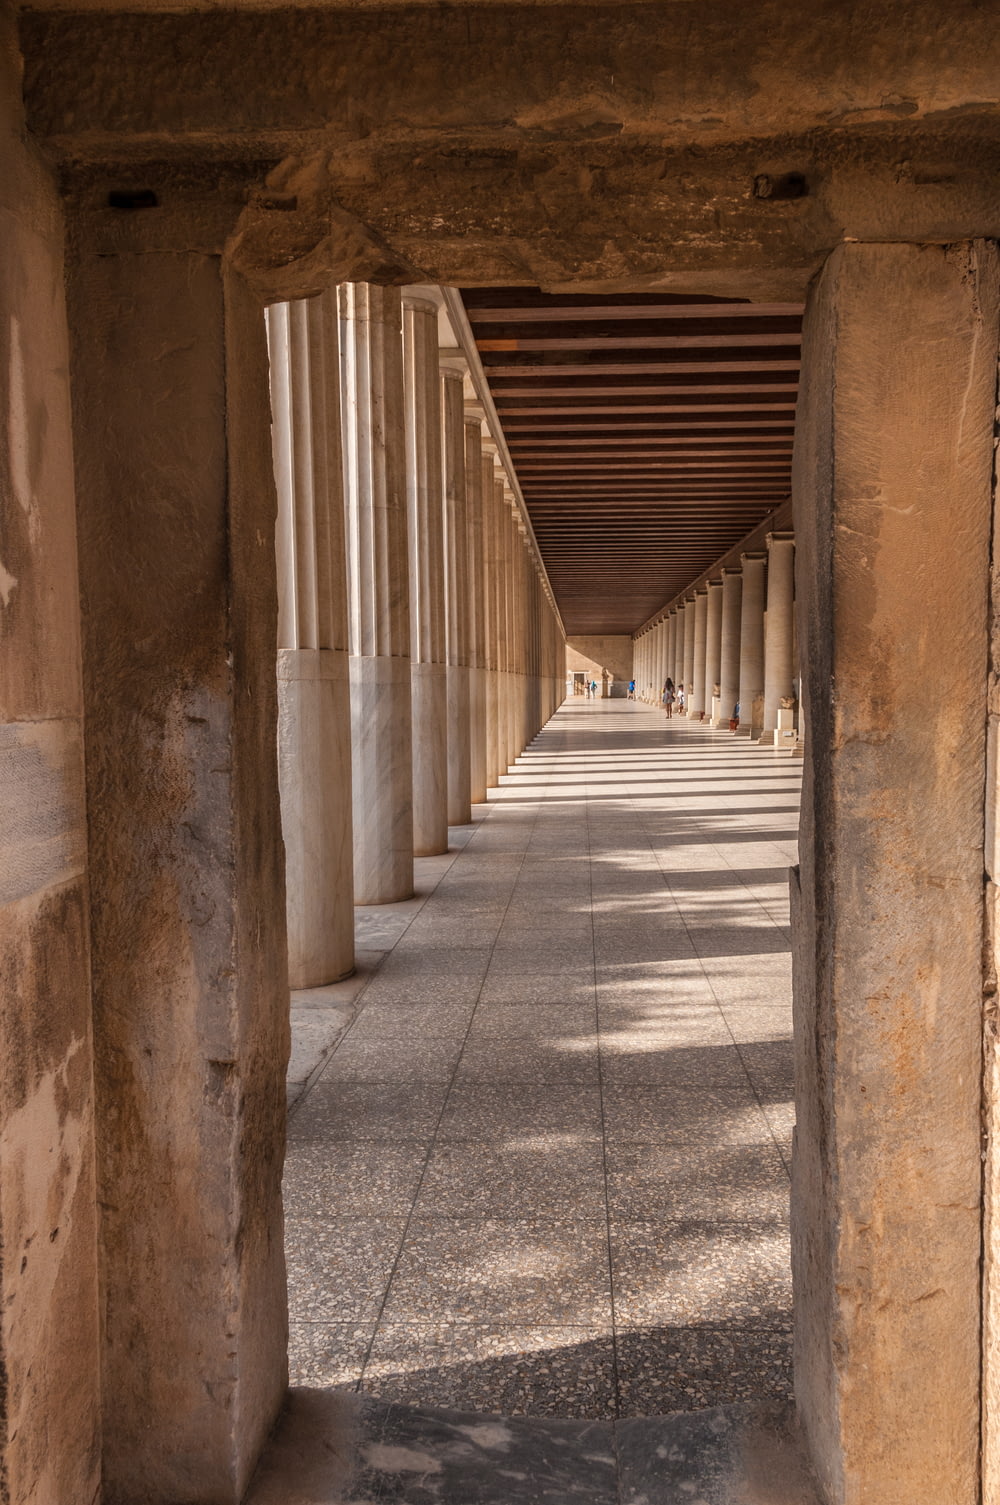 a hallway with columns